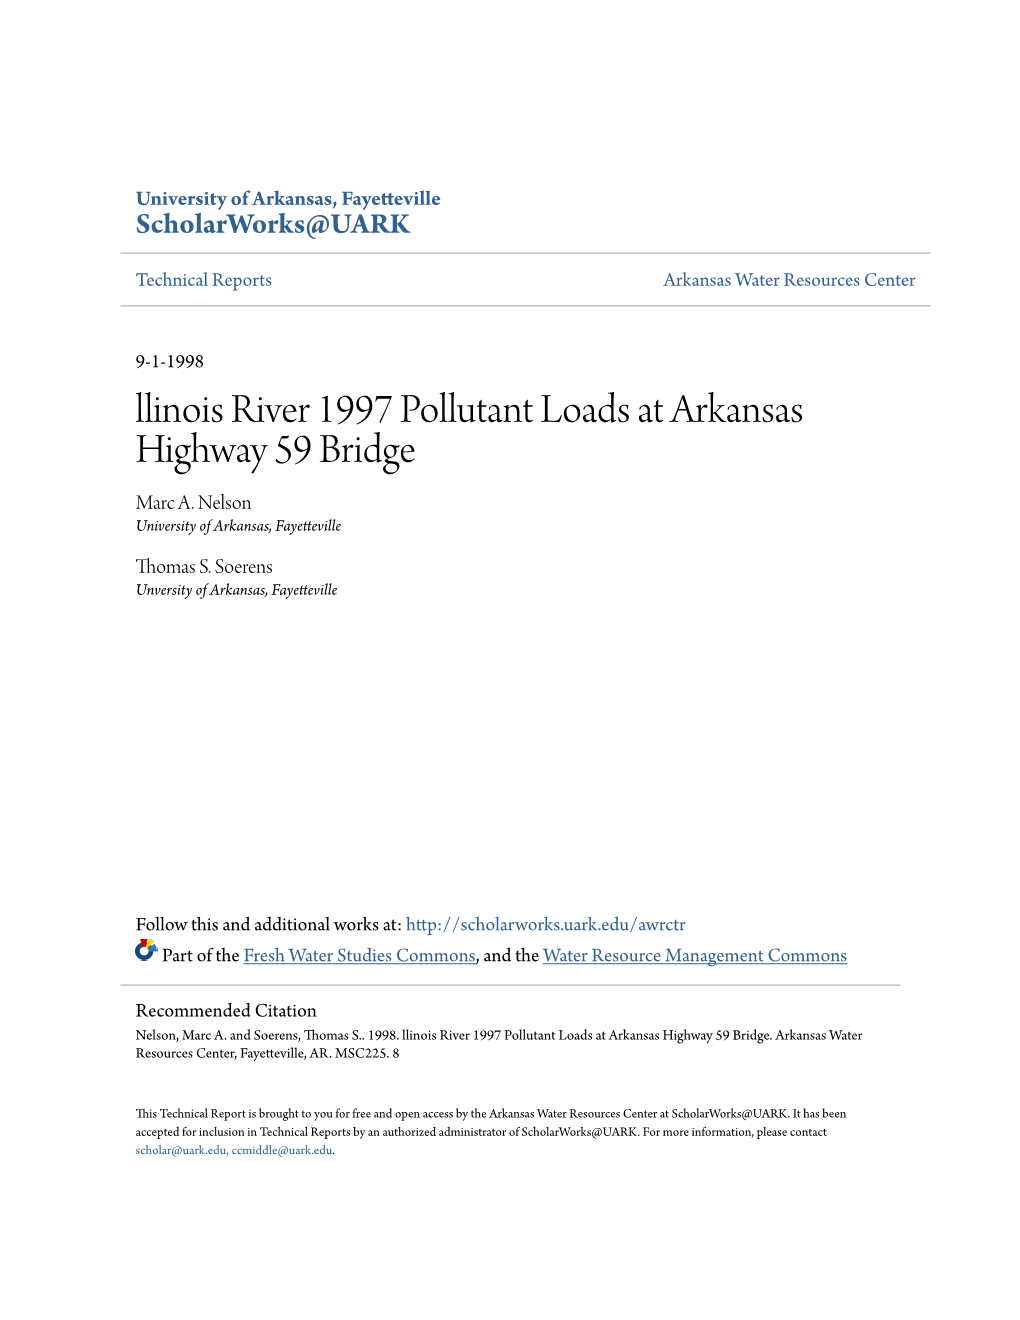 Llinois River 1997 Pollutant Loads at Arkansas Highway 59 Bridge Marc A